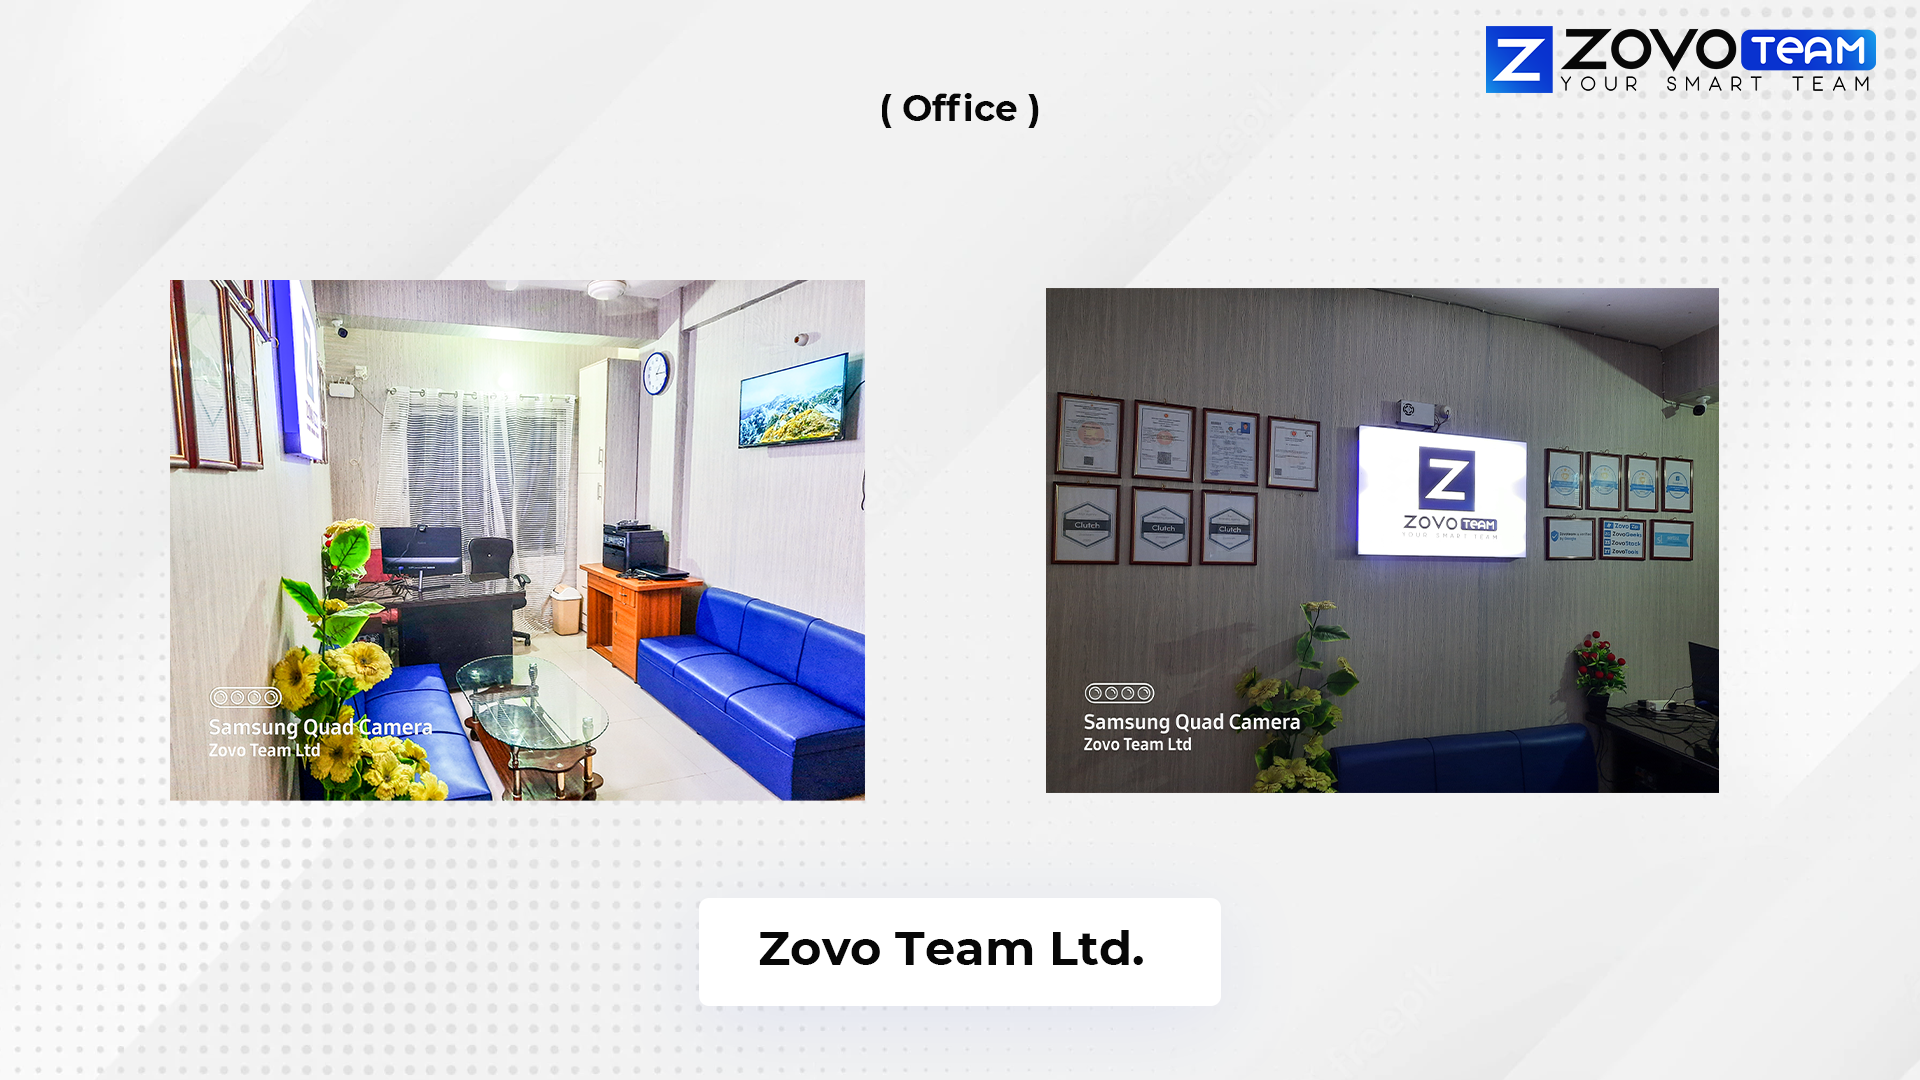 Zovo team office